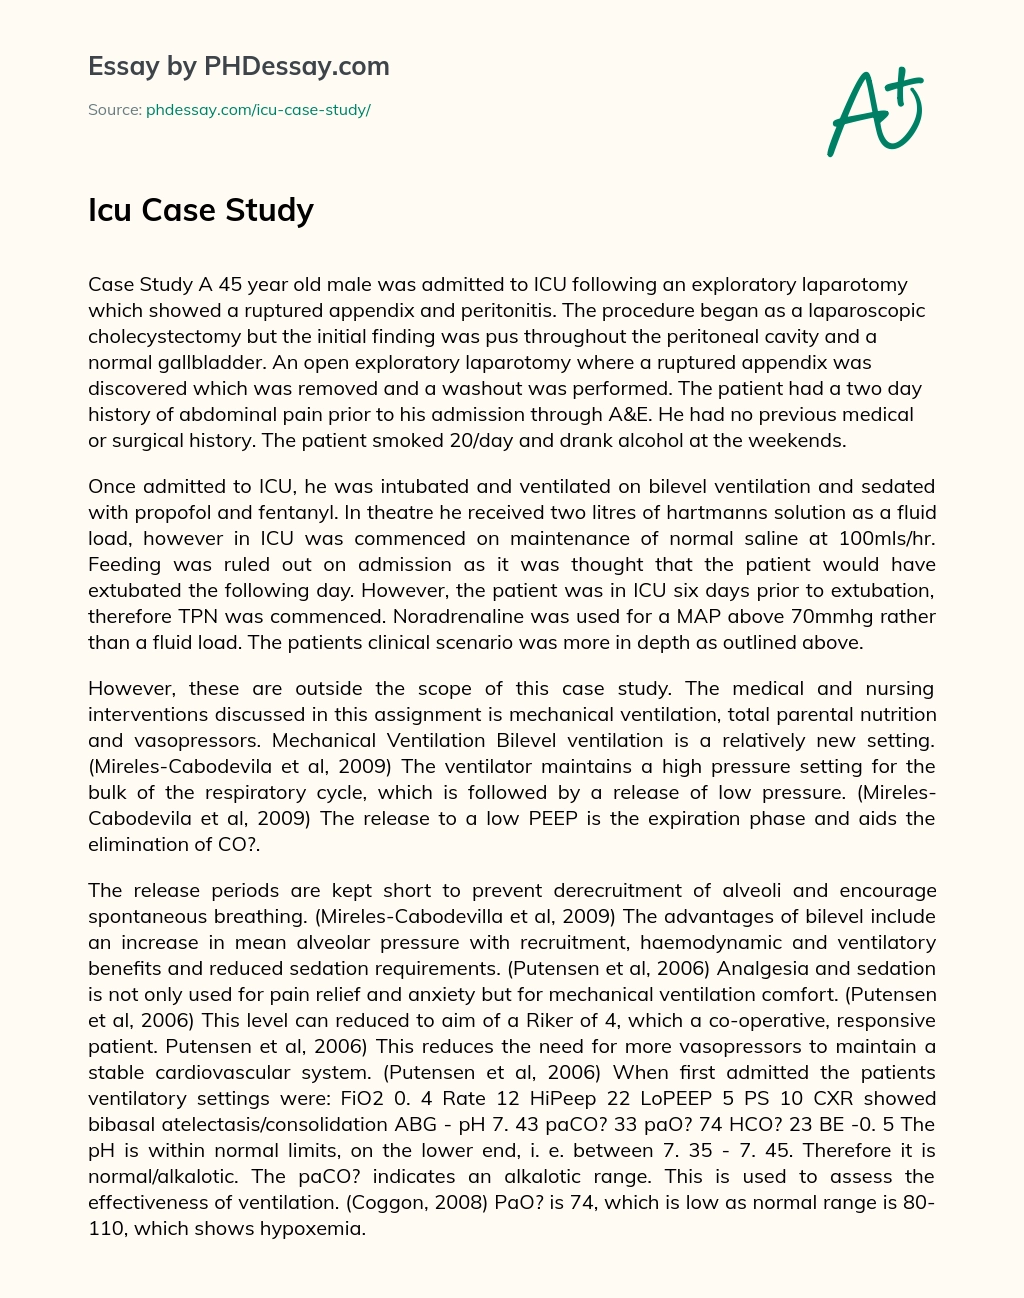 Icu Case Study essay